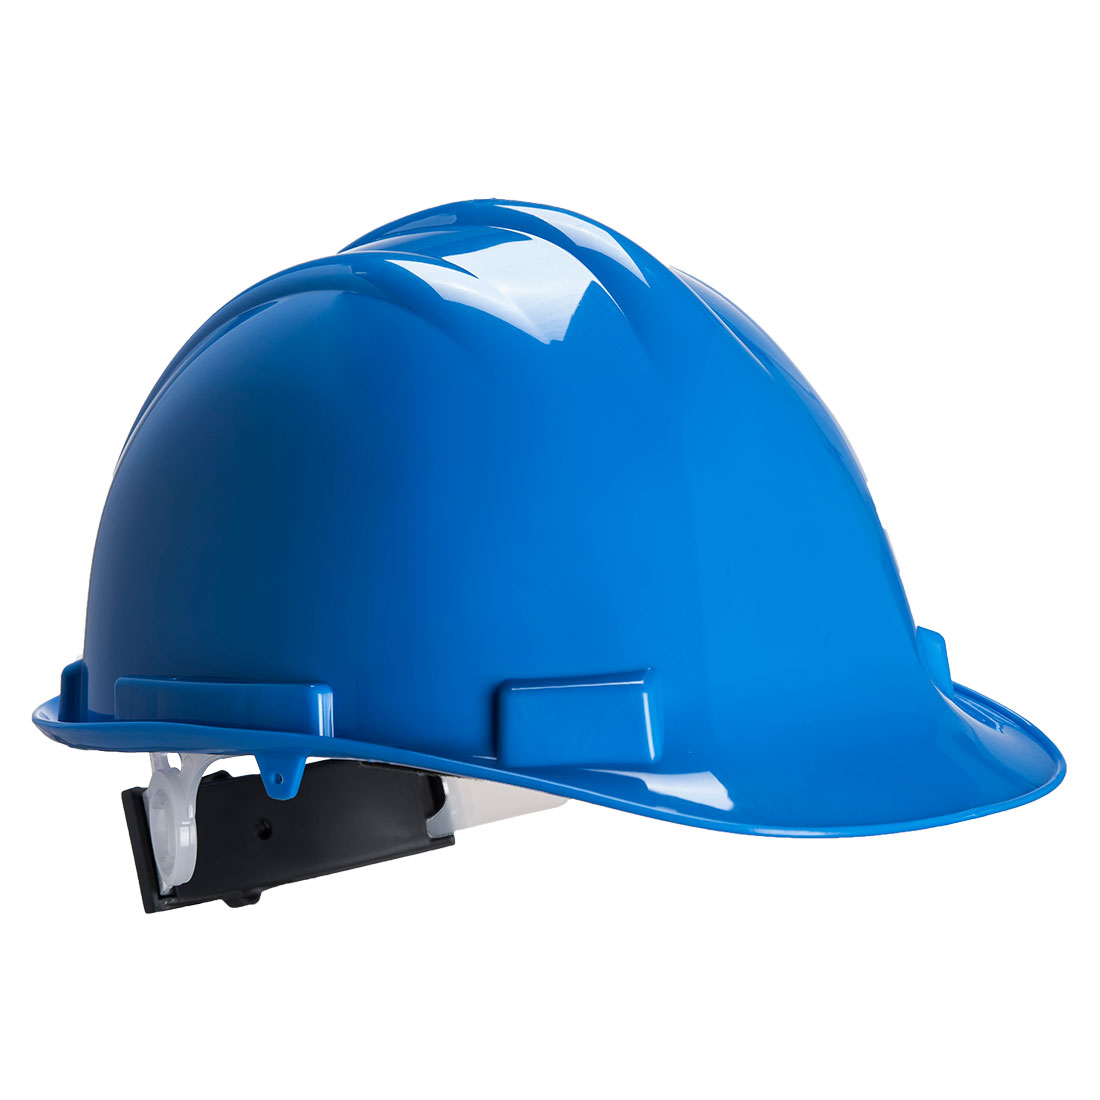 Expertbase Wheel Safety Helmet - Royal Blue